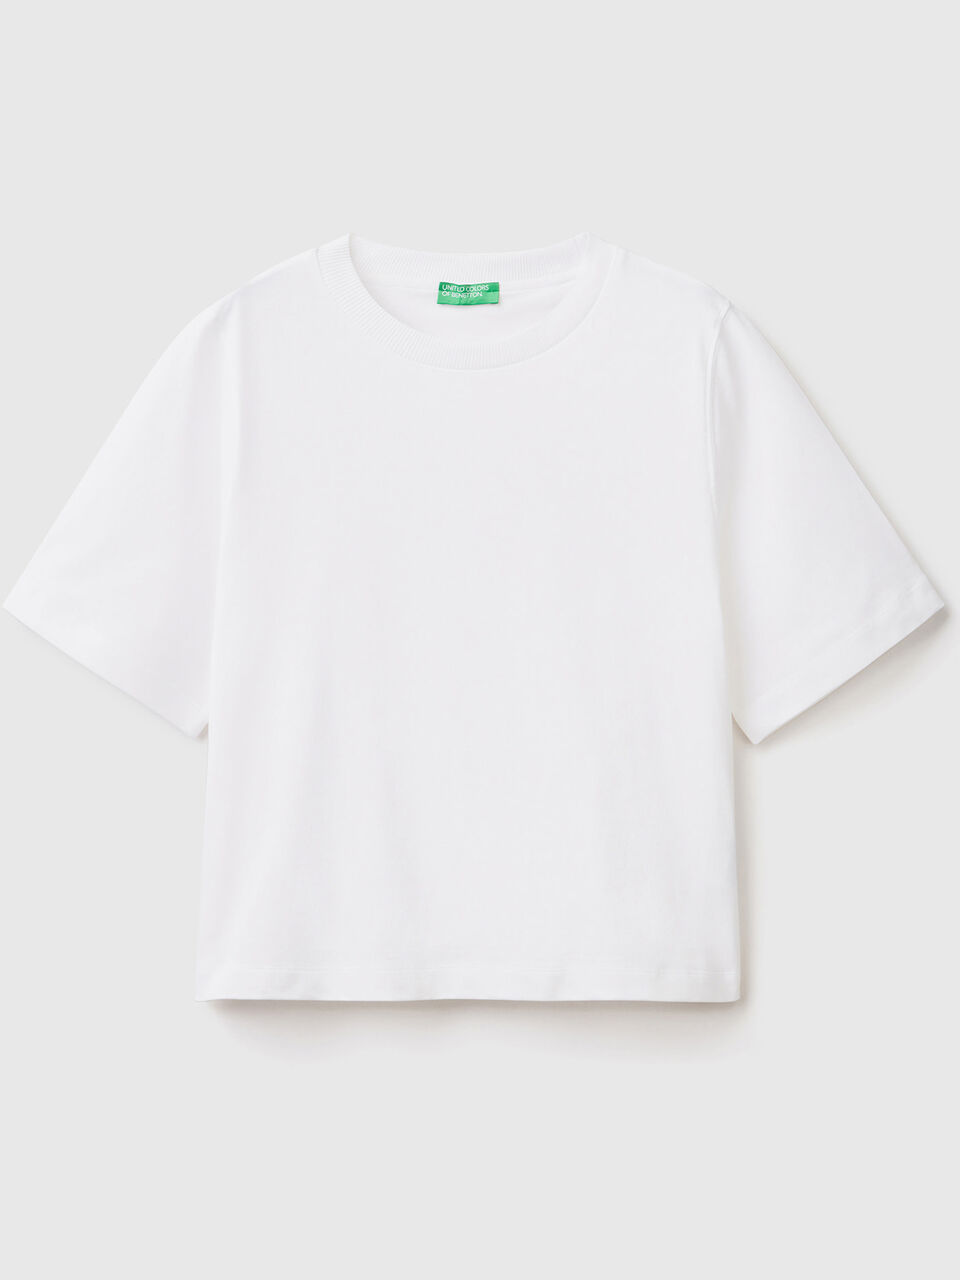 100% cotton boxy fit - Benetton t-shirt White 